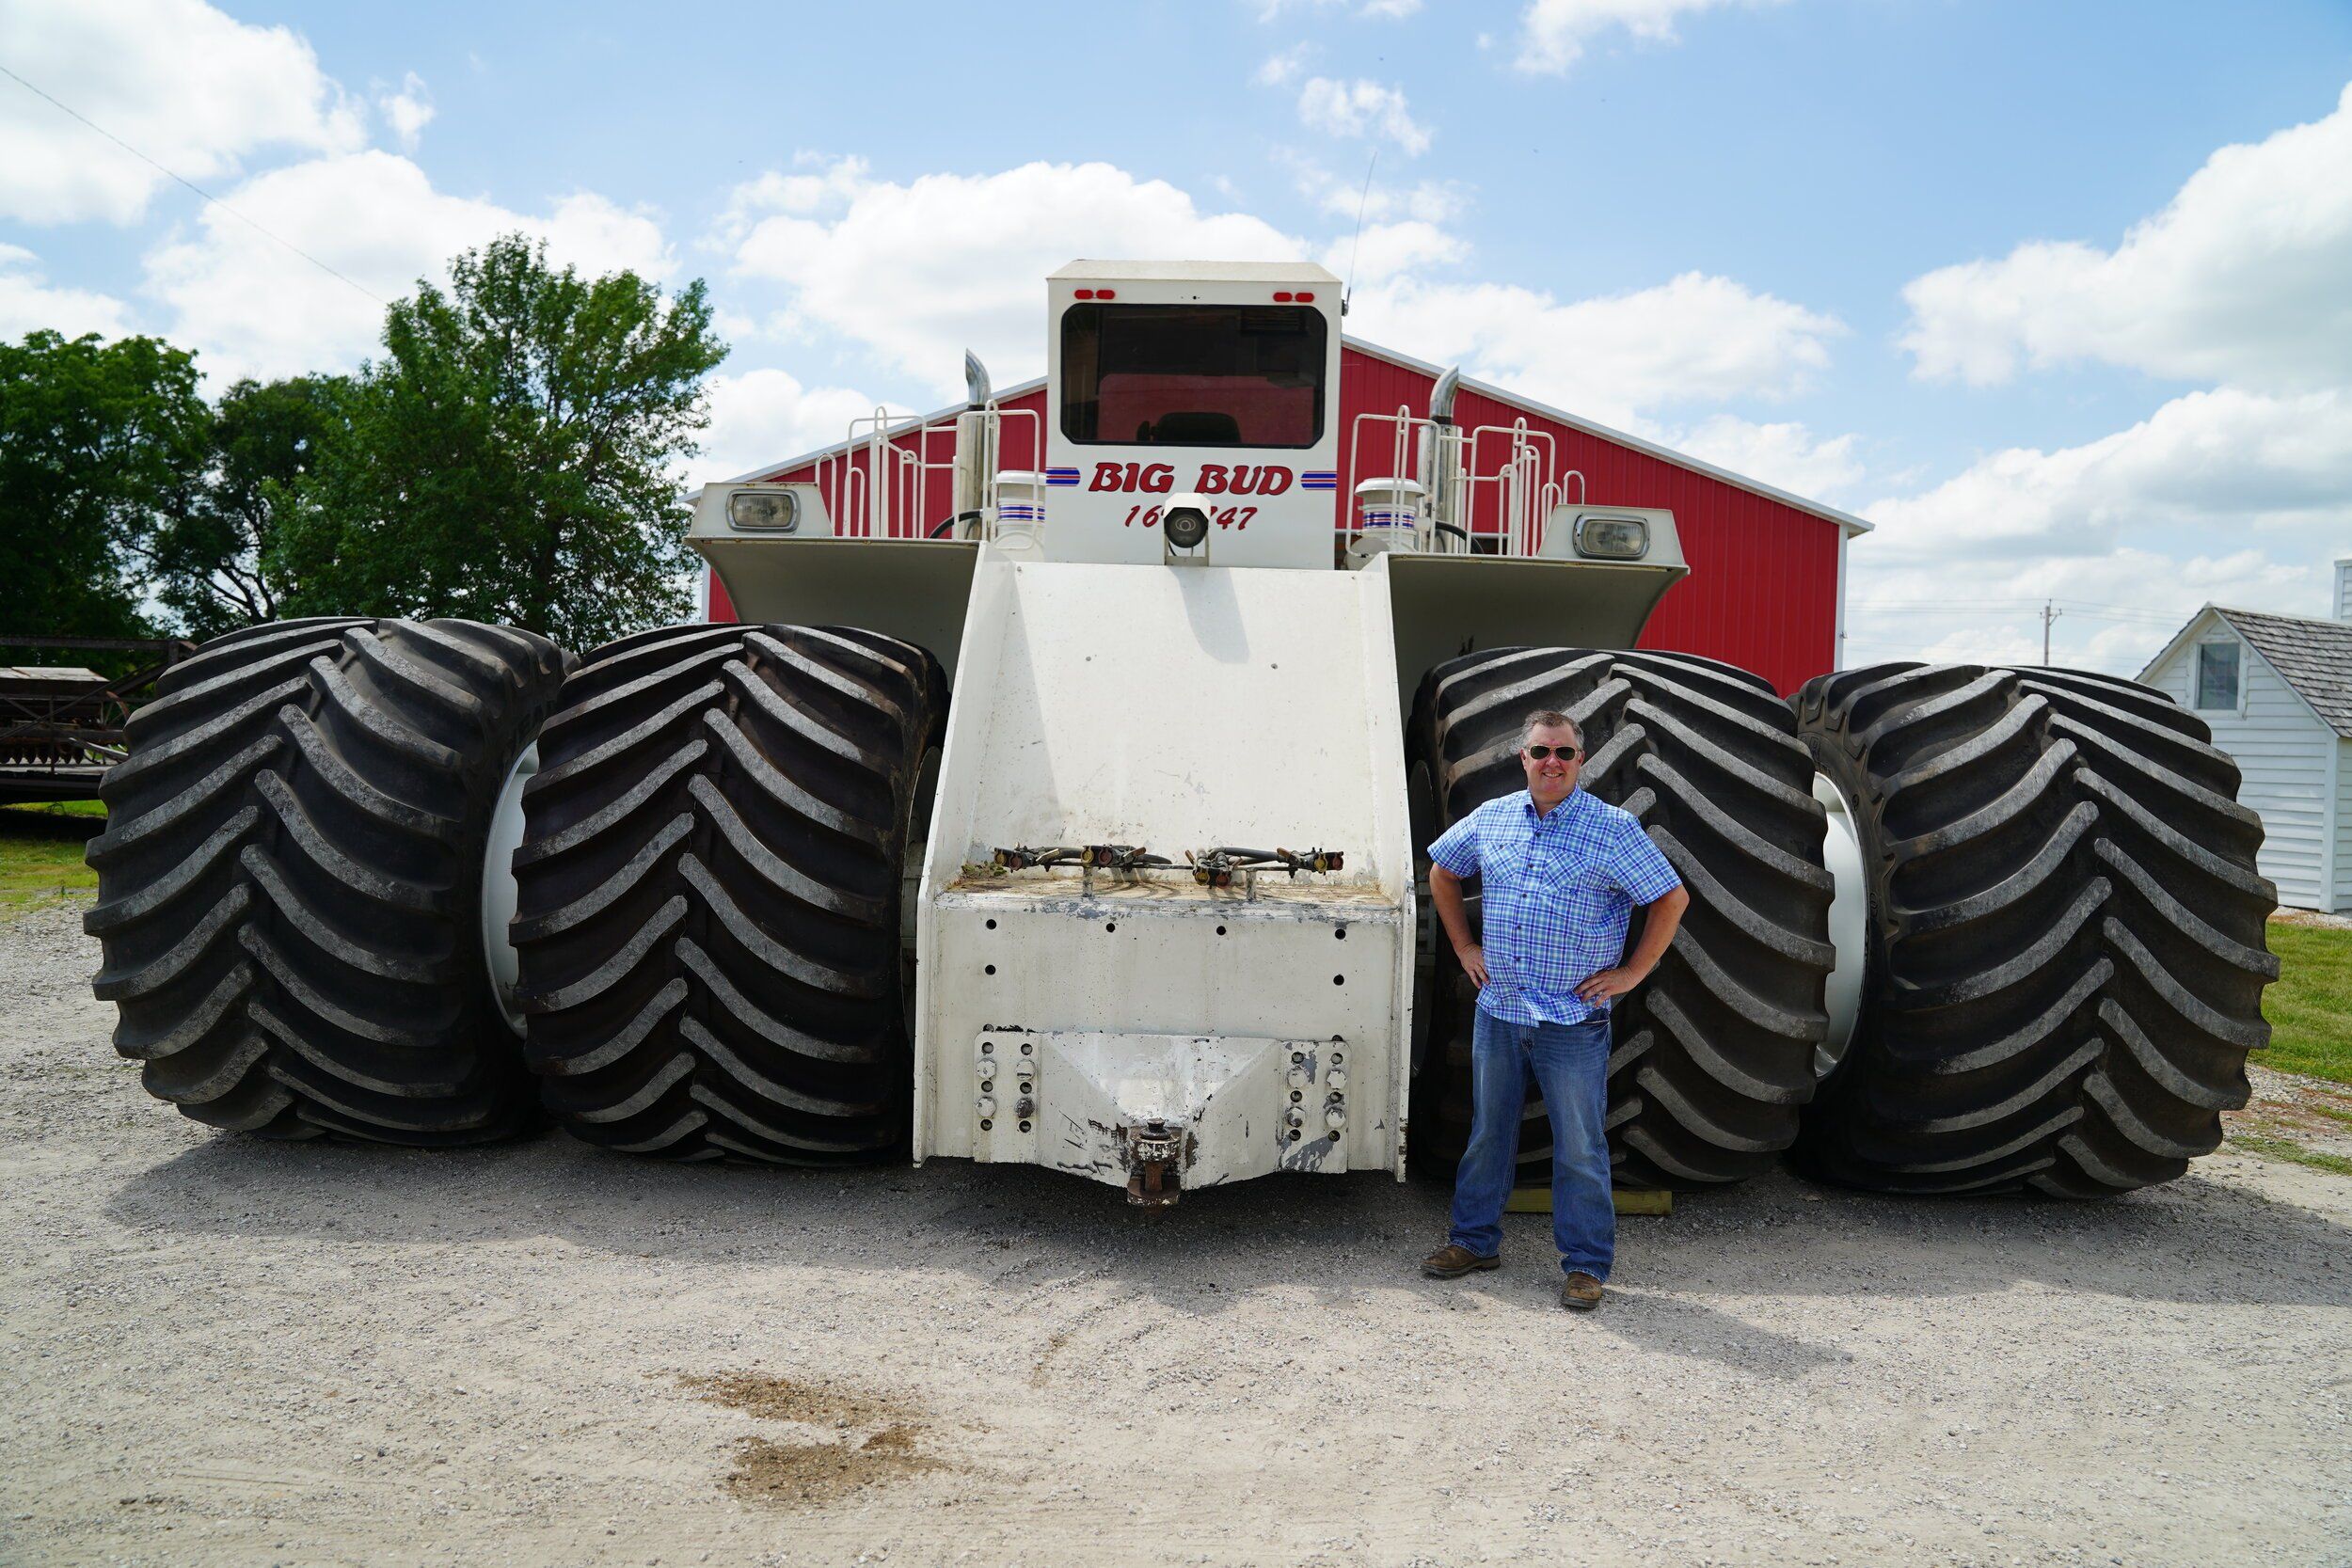 A világ legnagyobb traktora, a Big Bud 747